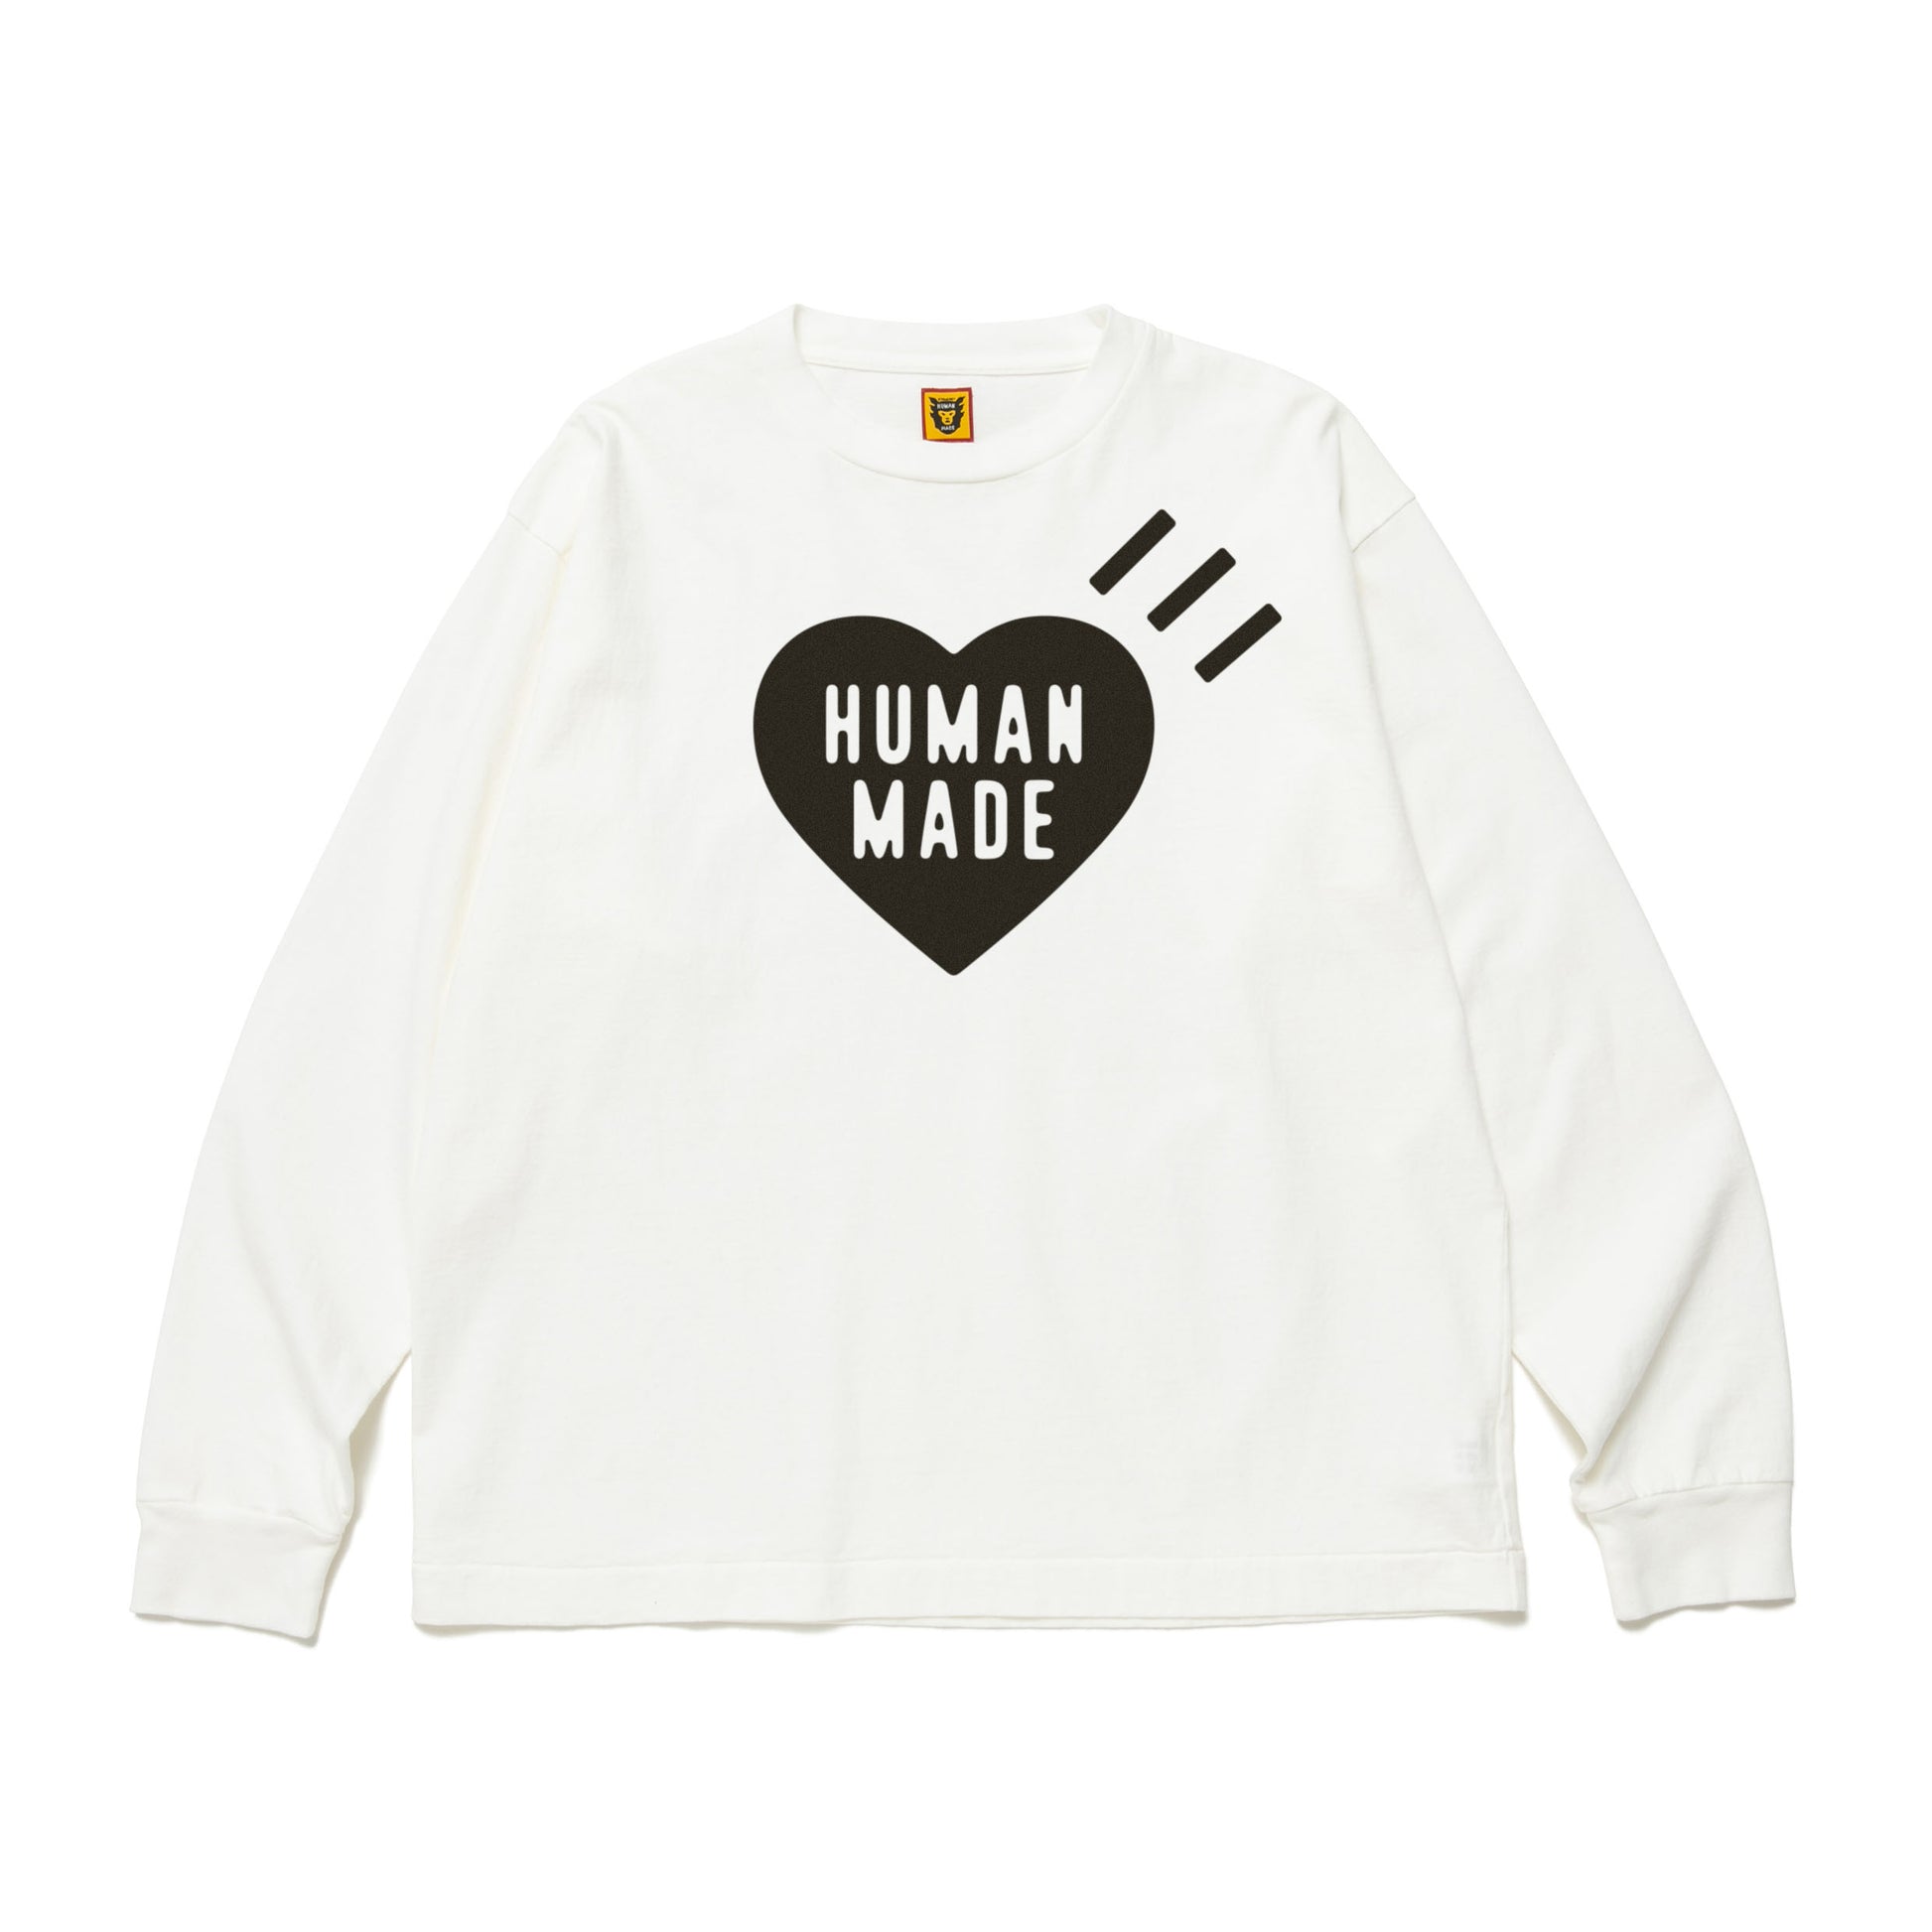 HUMAN MADE HEART L/S T-SHIRT White